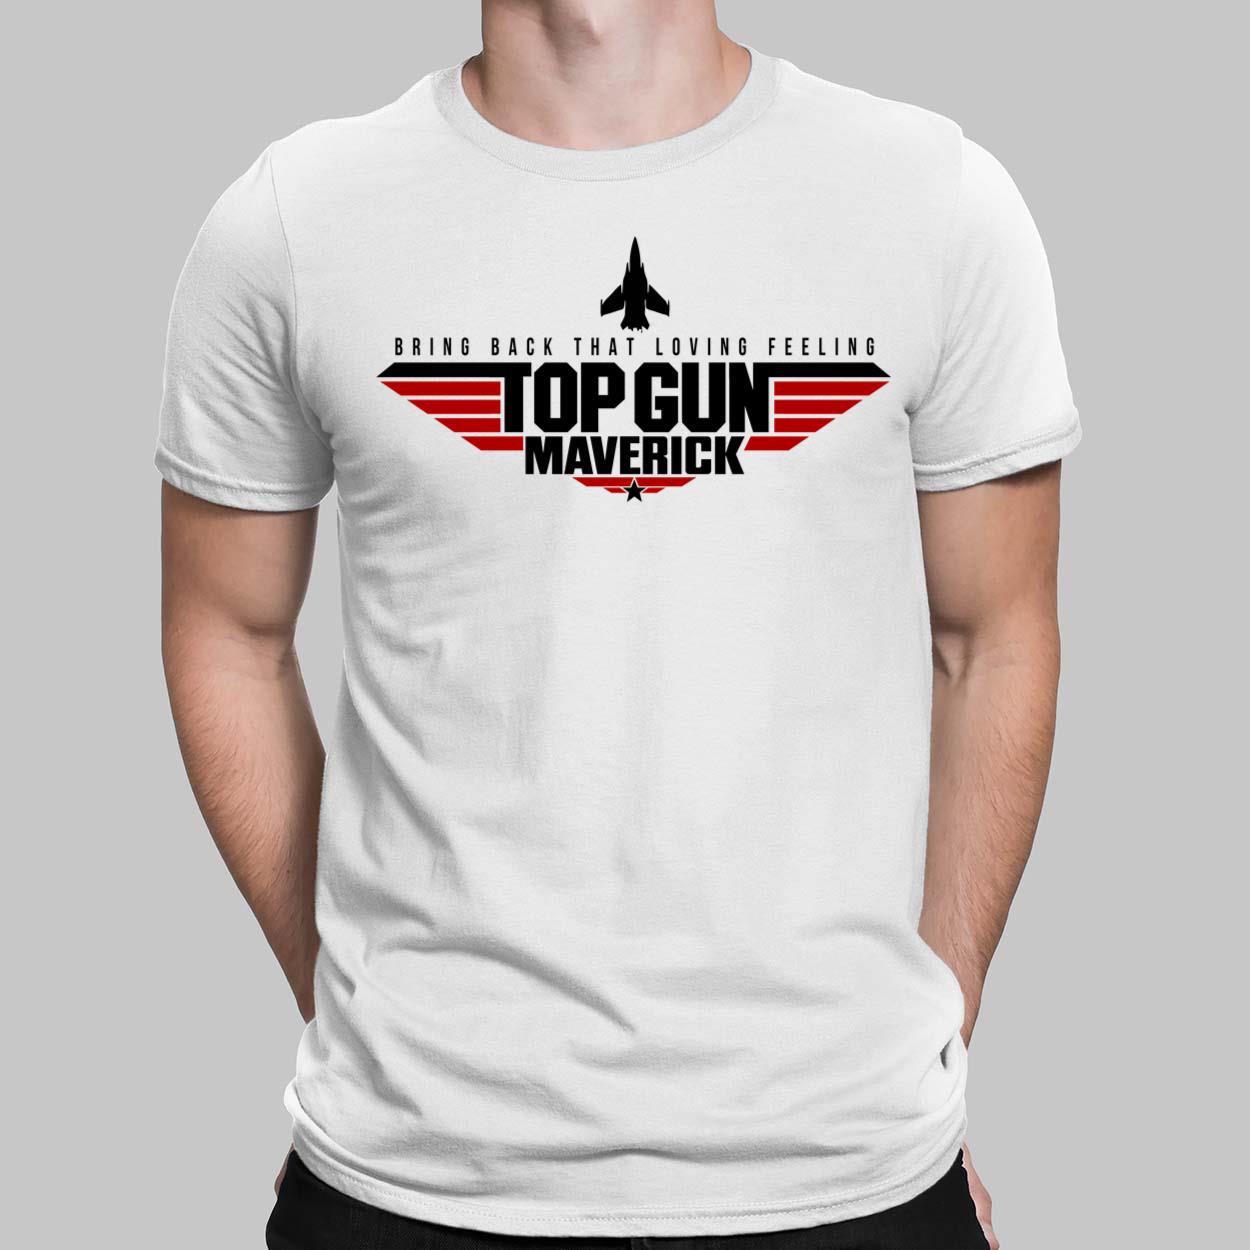 Top Gun Feel Need T-Shirt